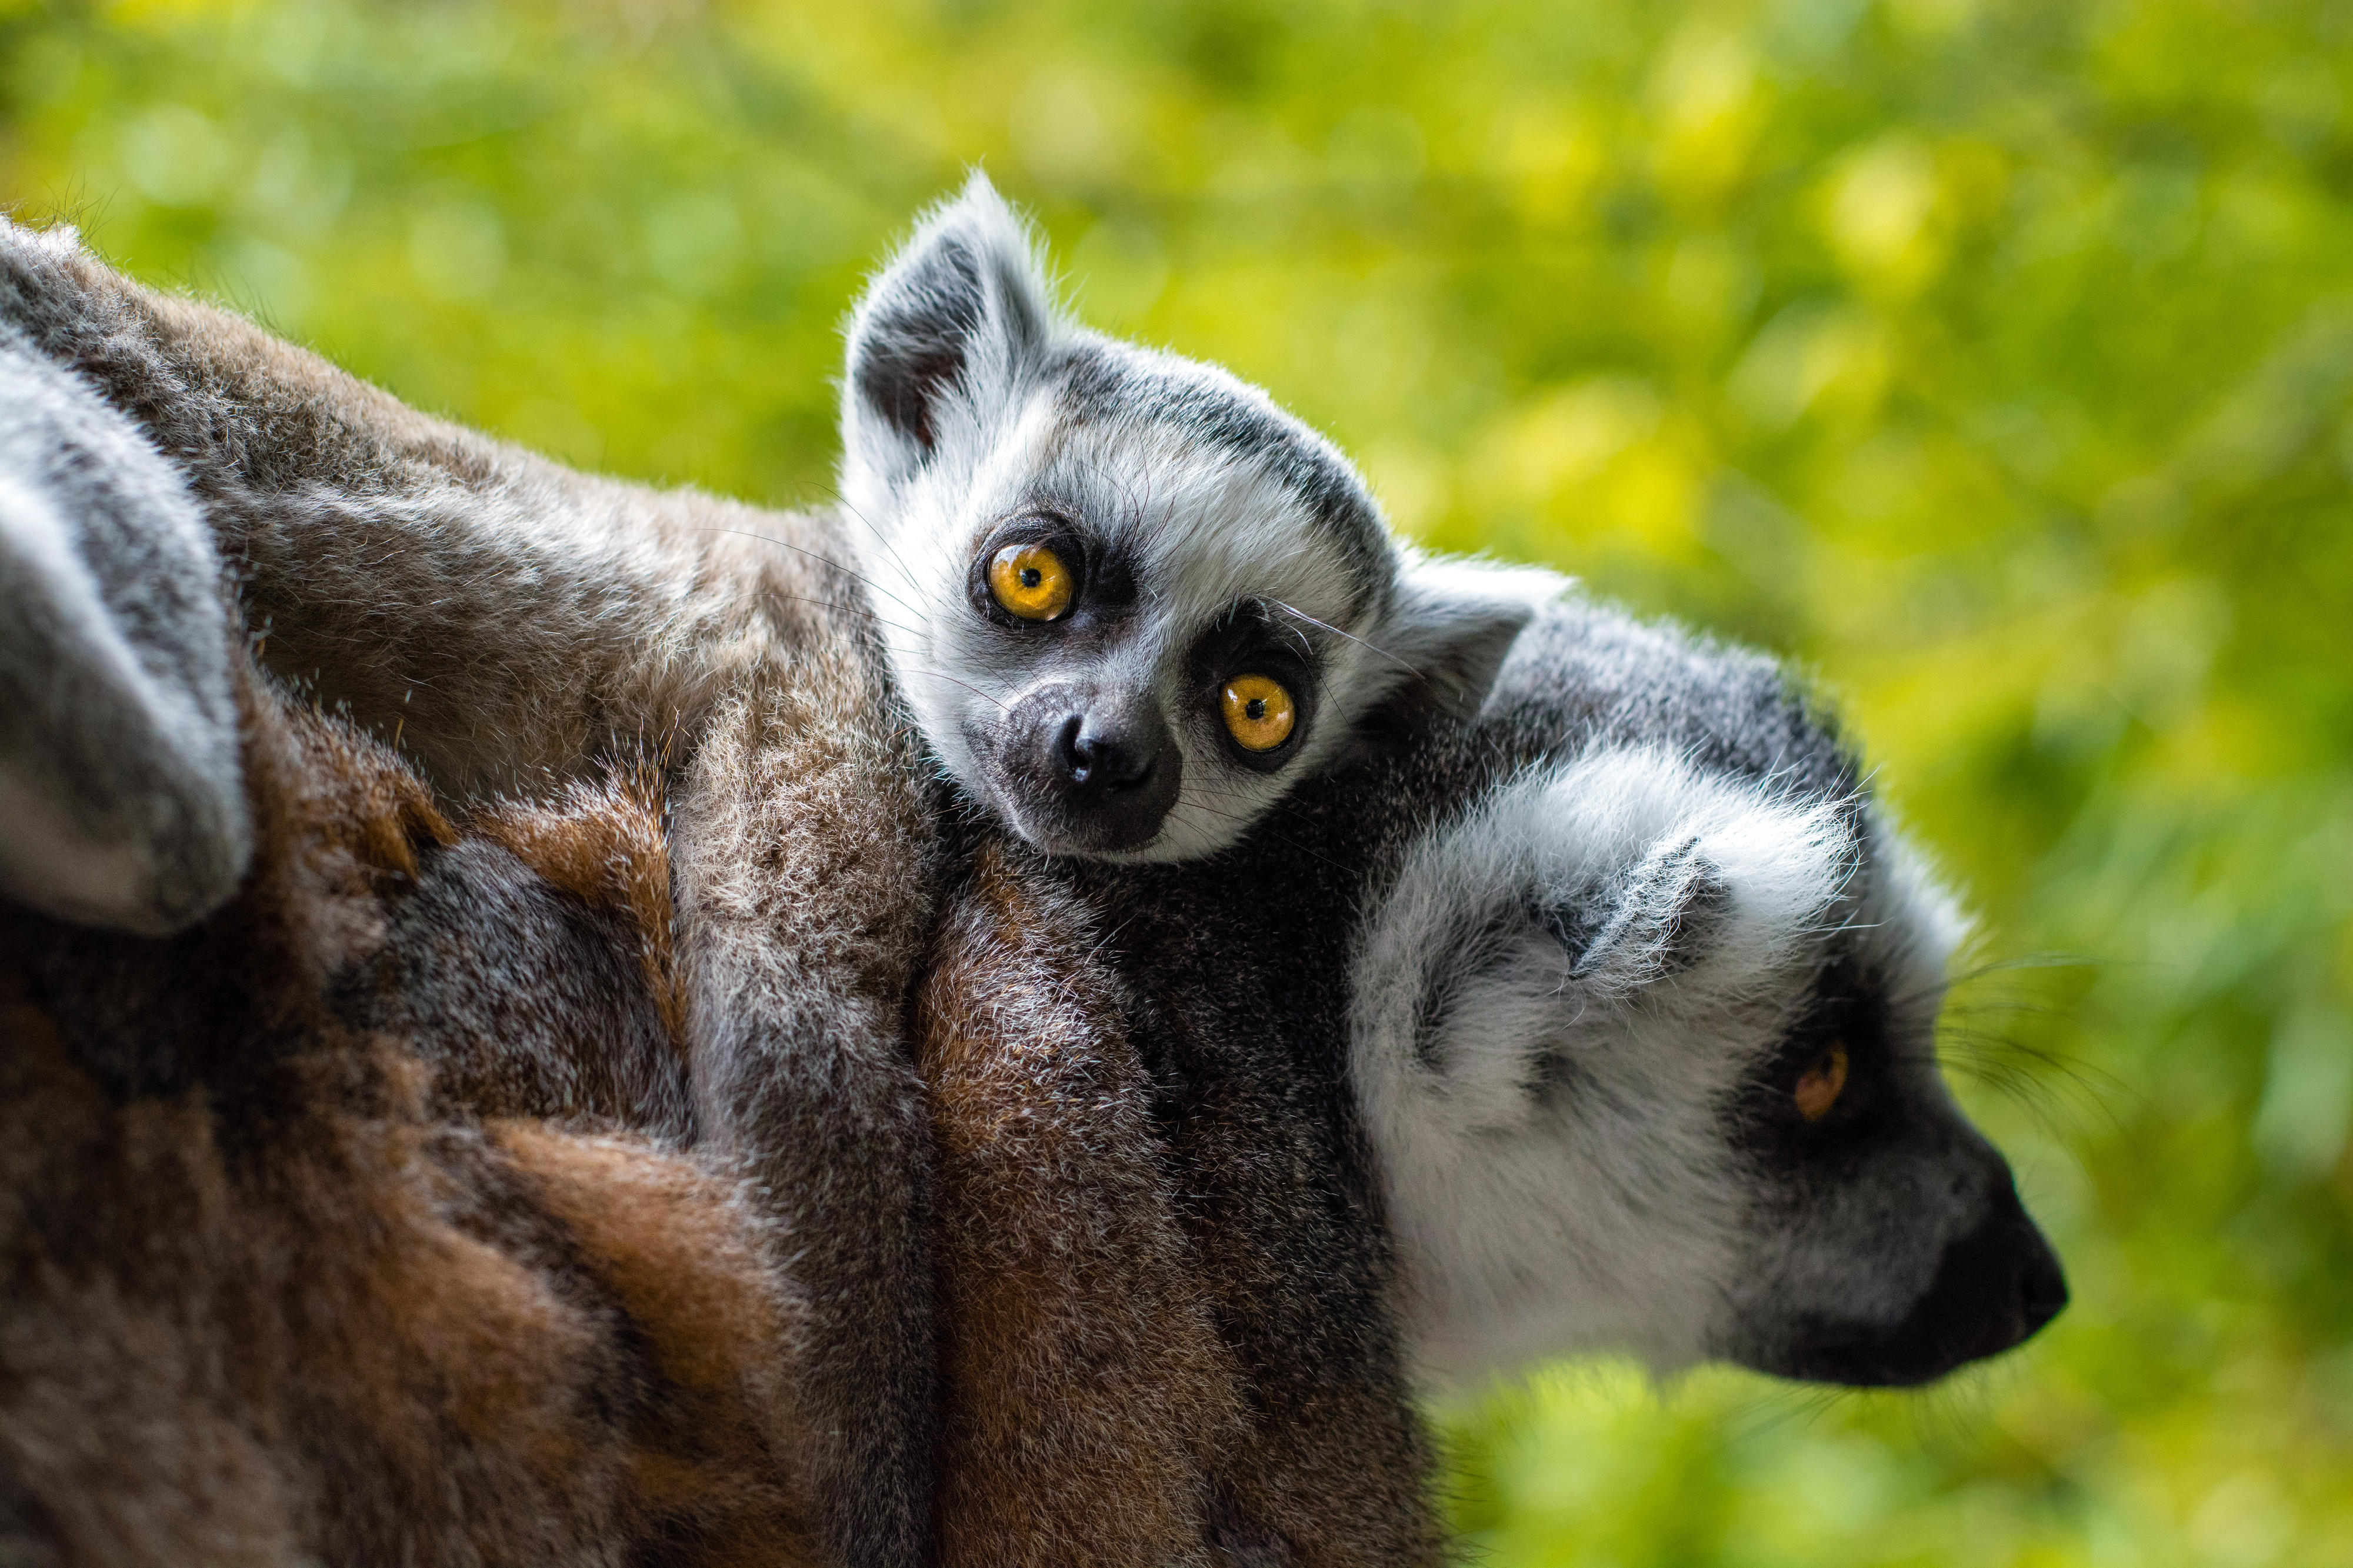 Madagascar: A lemur with an offspring